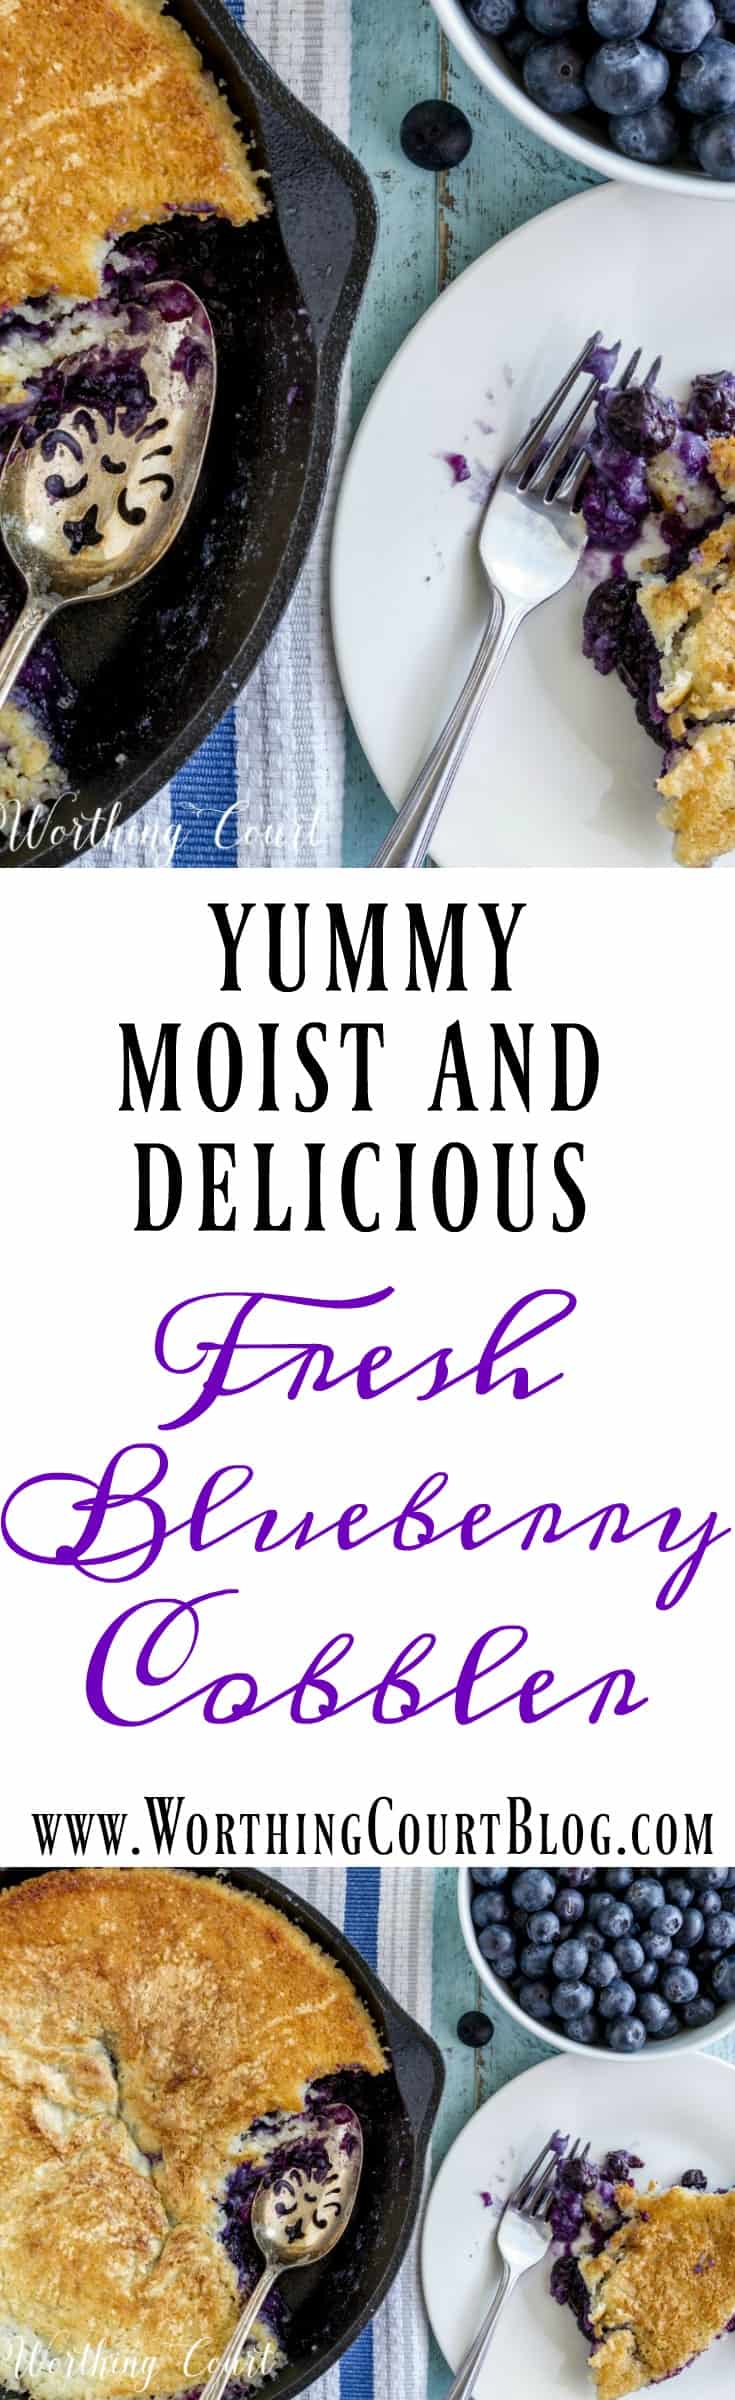 Delicious Fresh Blueberry Cobbler Recipe  graphic.